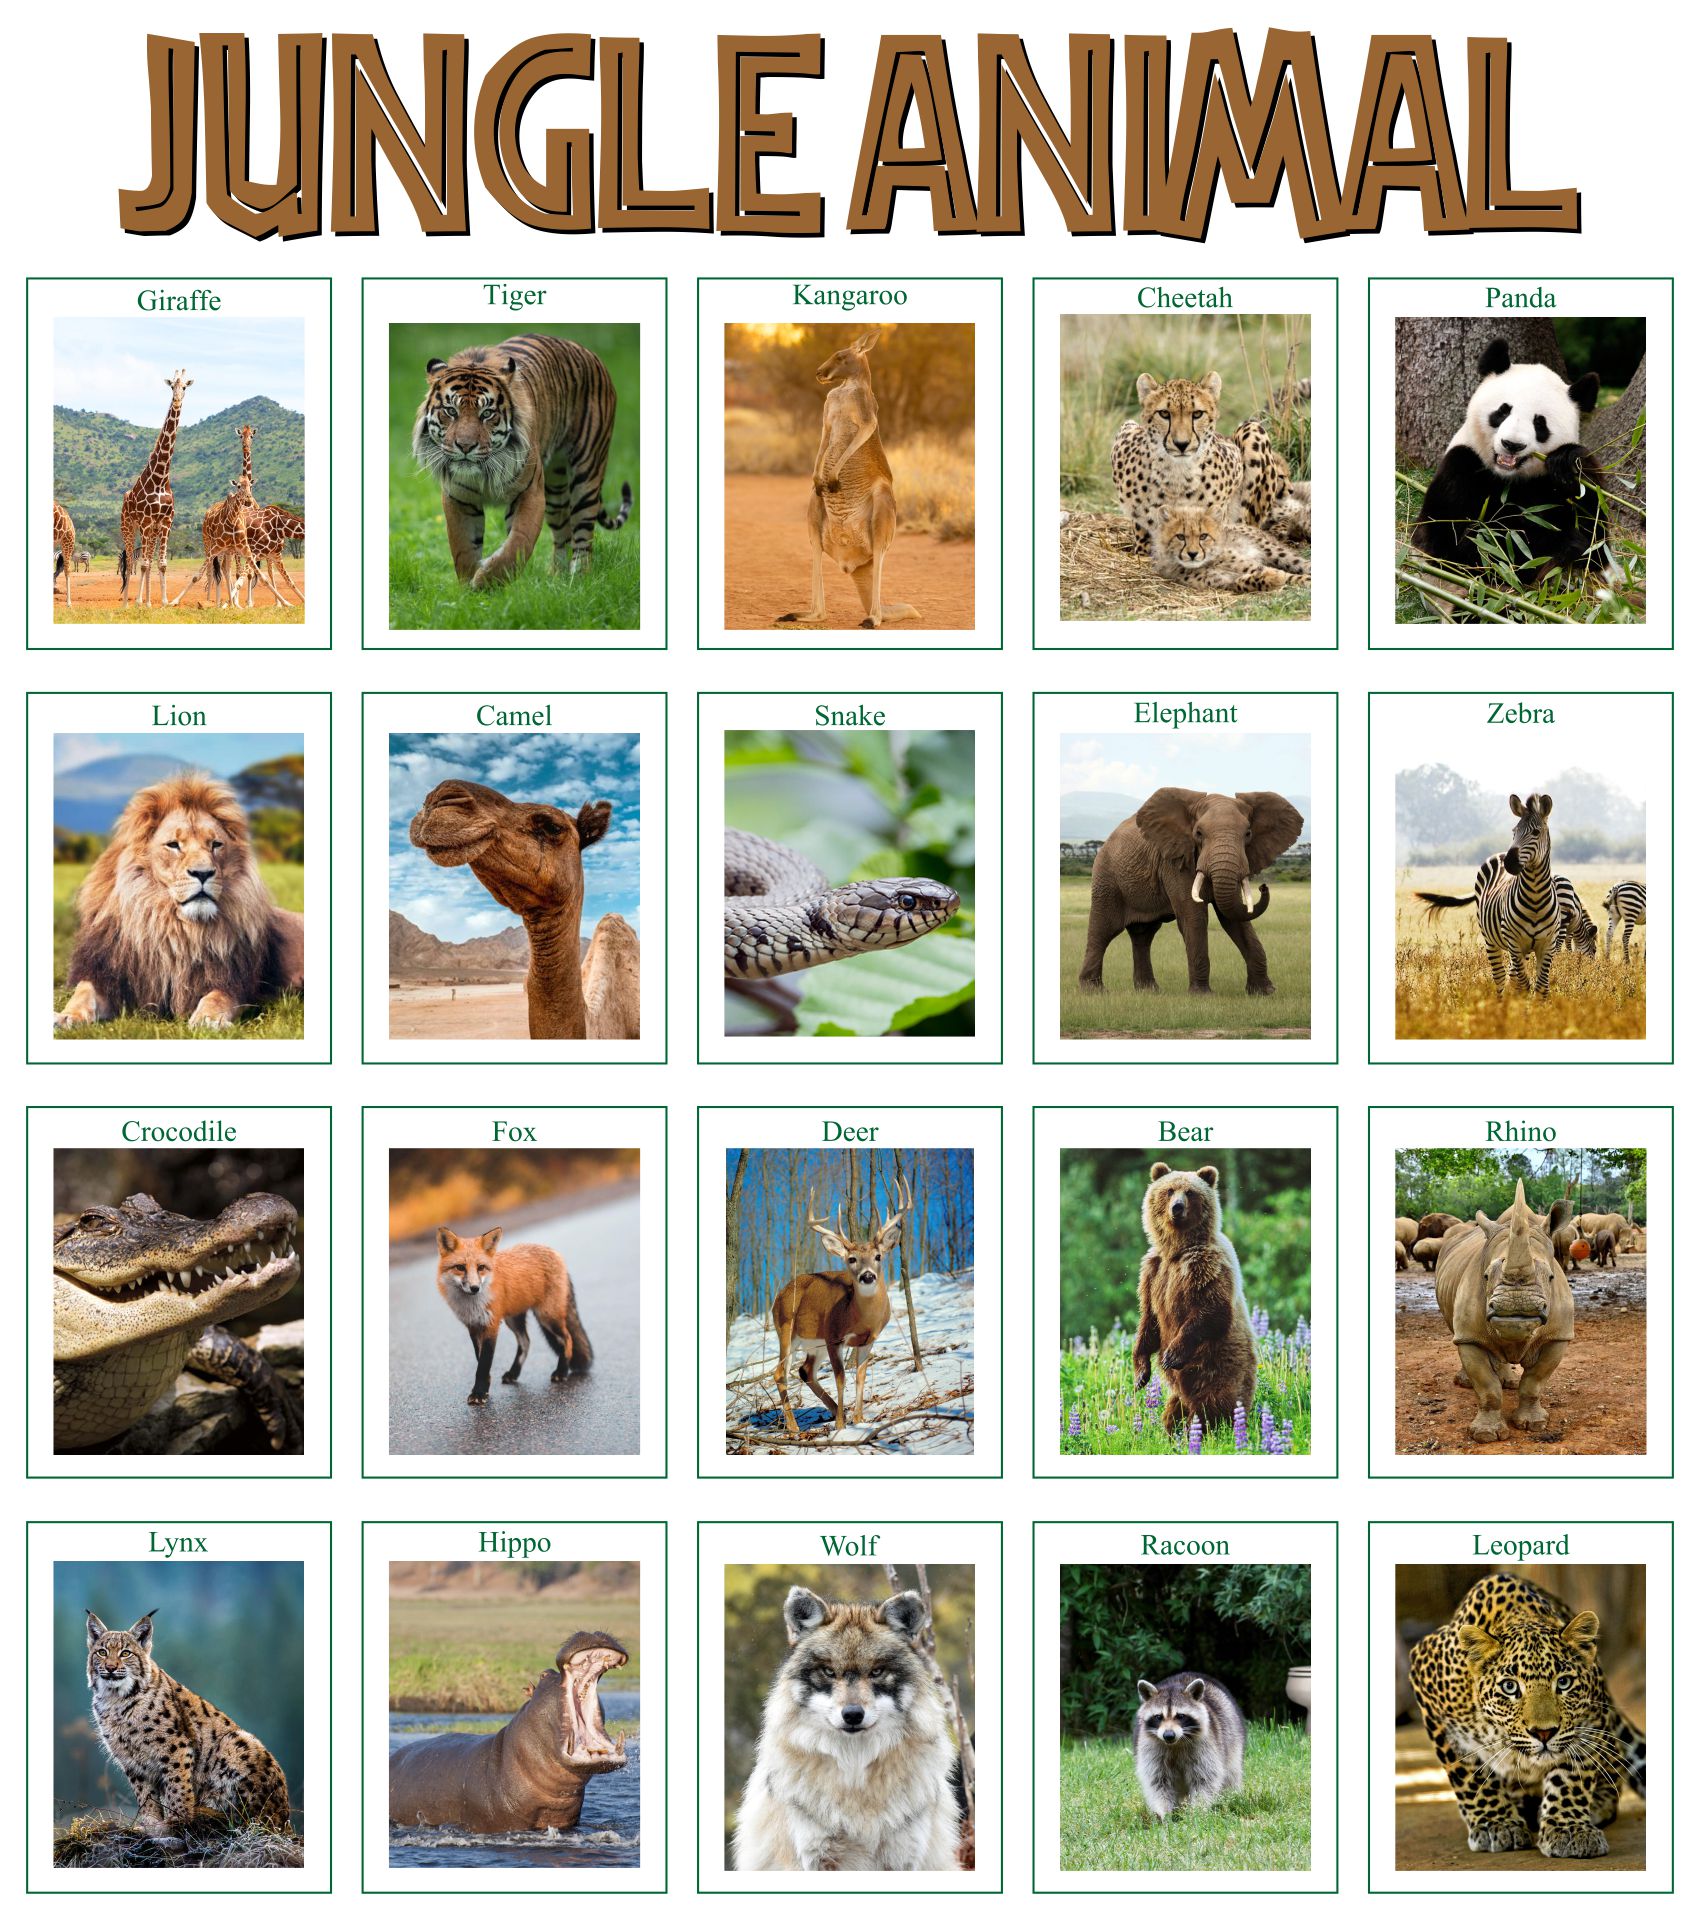 10 Best Free Printable Animal Flash Cards 